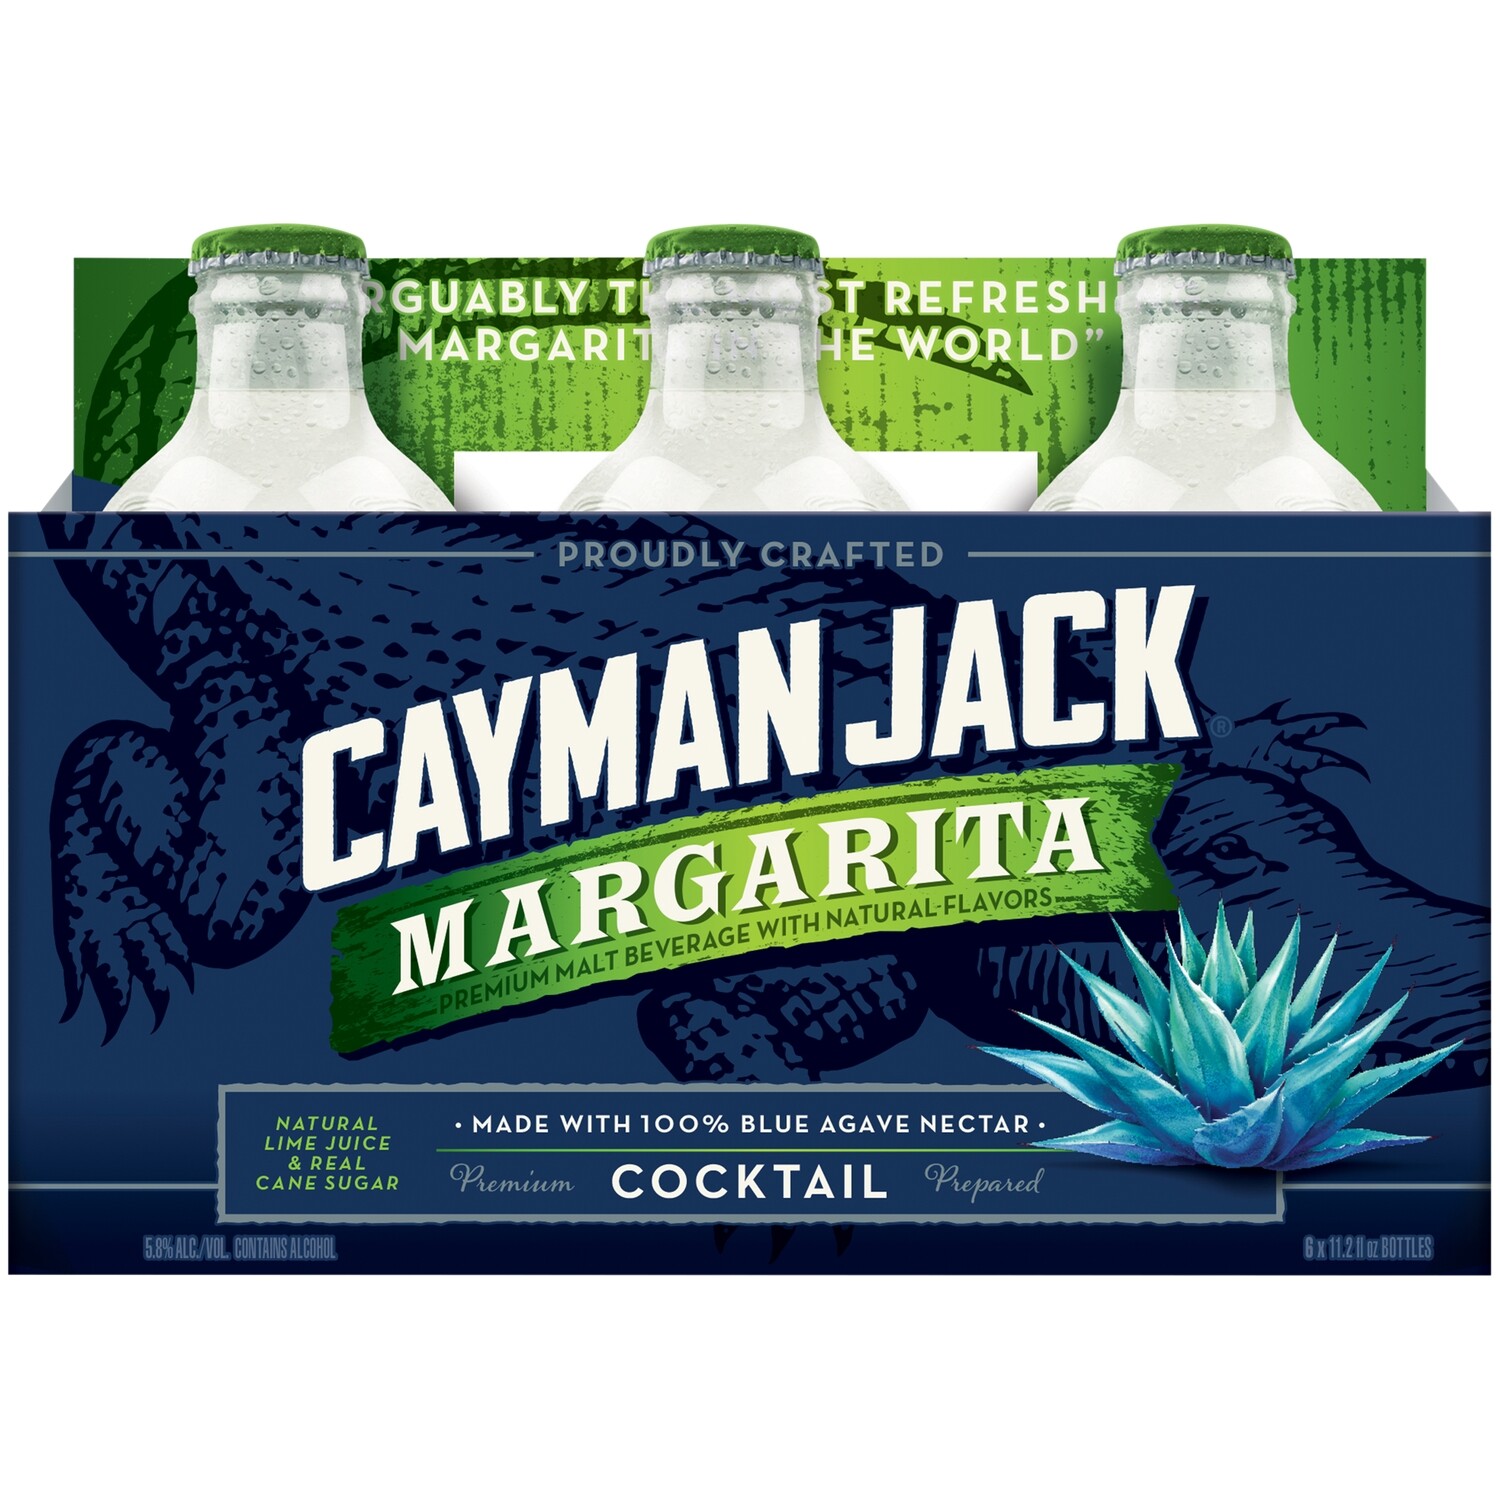 Cayman Jack Margarita 6pk btl